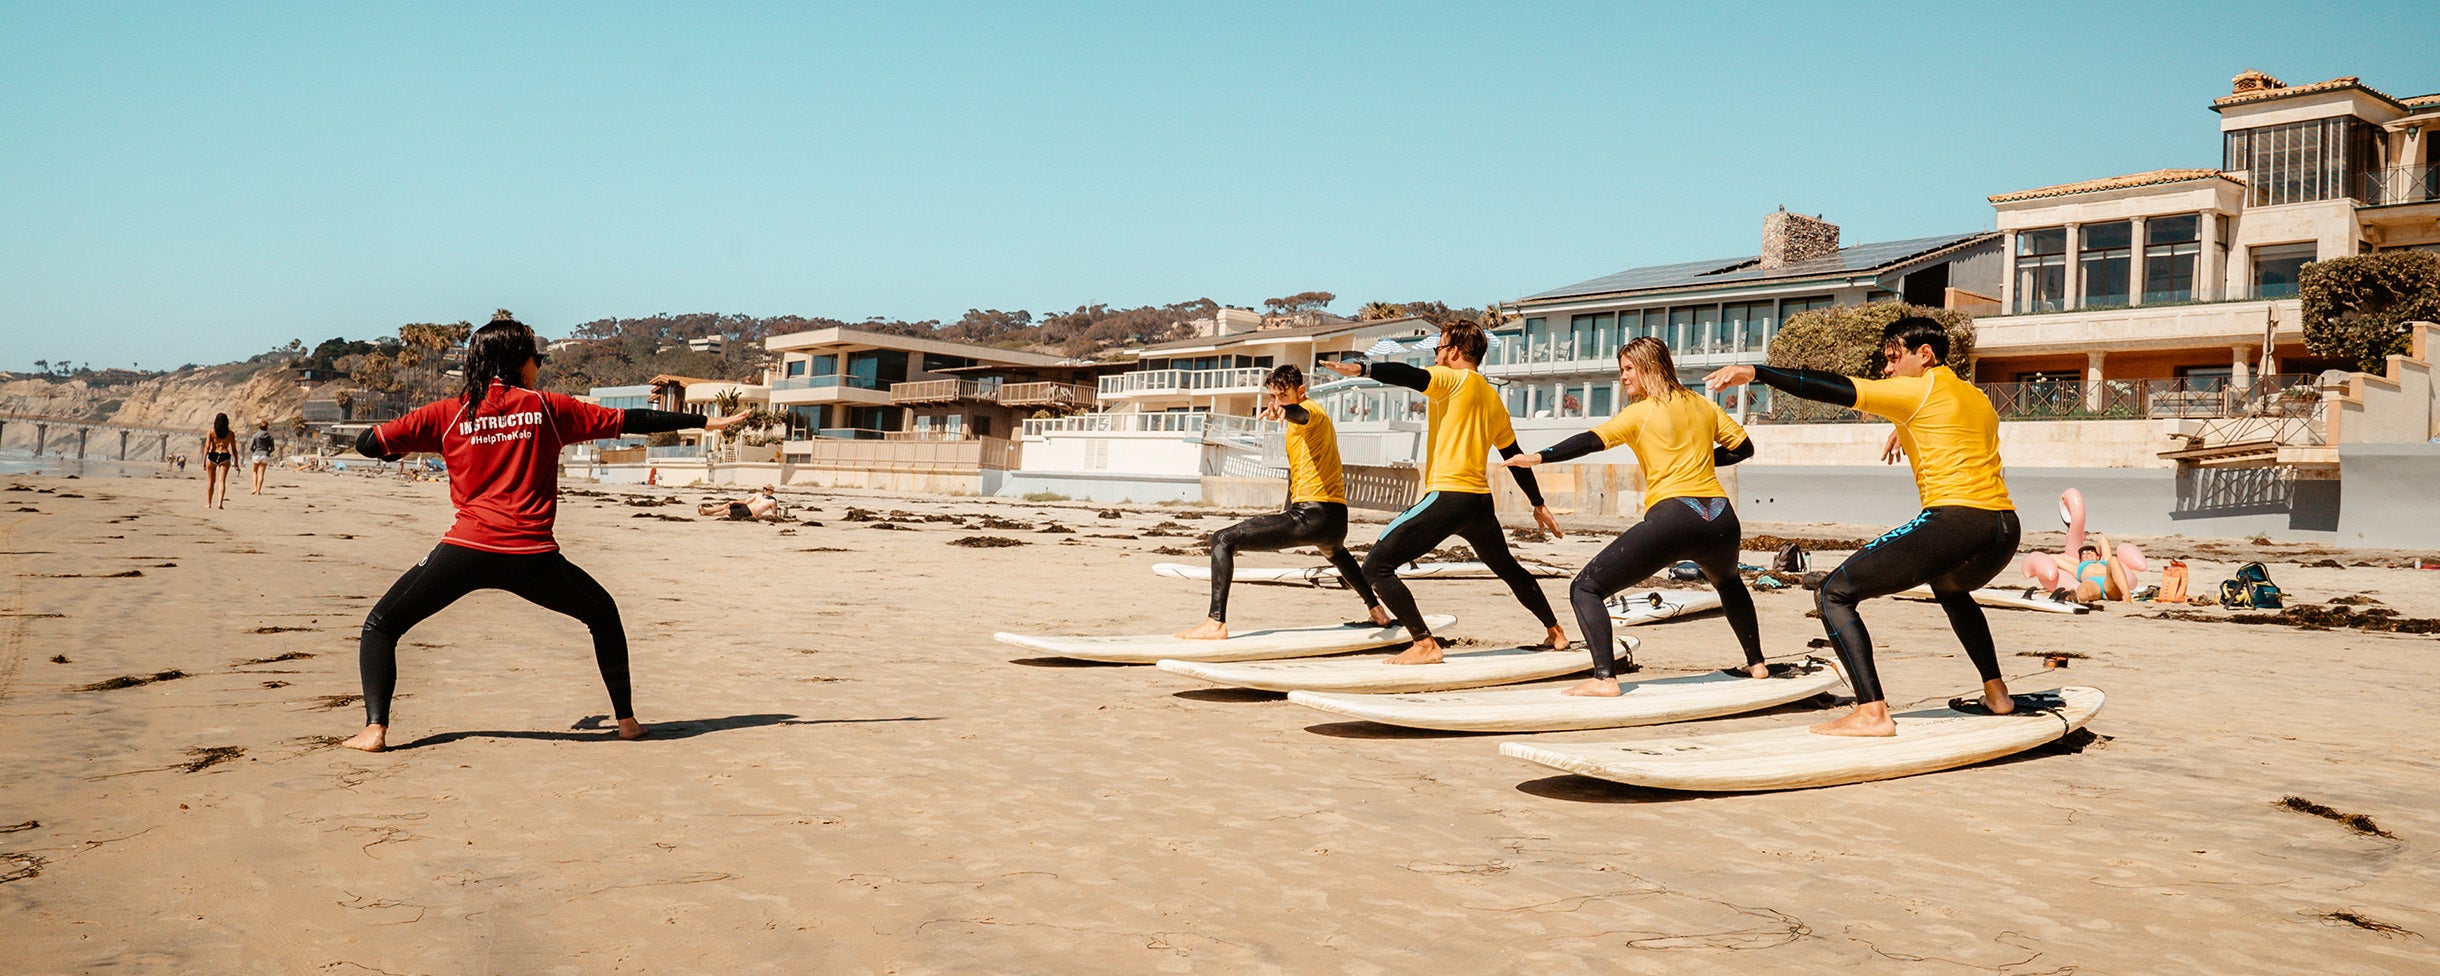 Beginner friendly group surf lessons in La Jolla, San Diego California.